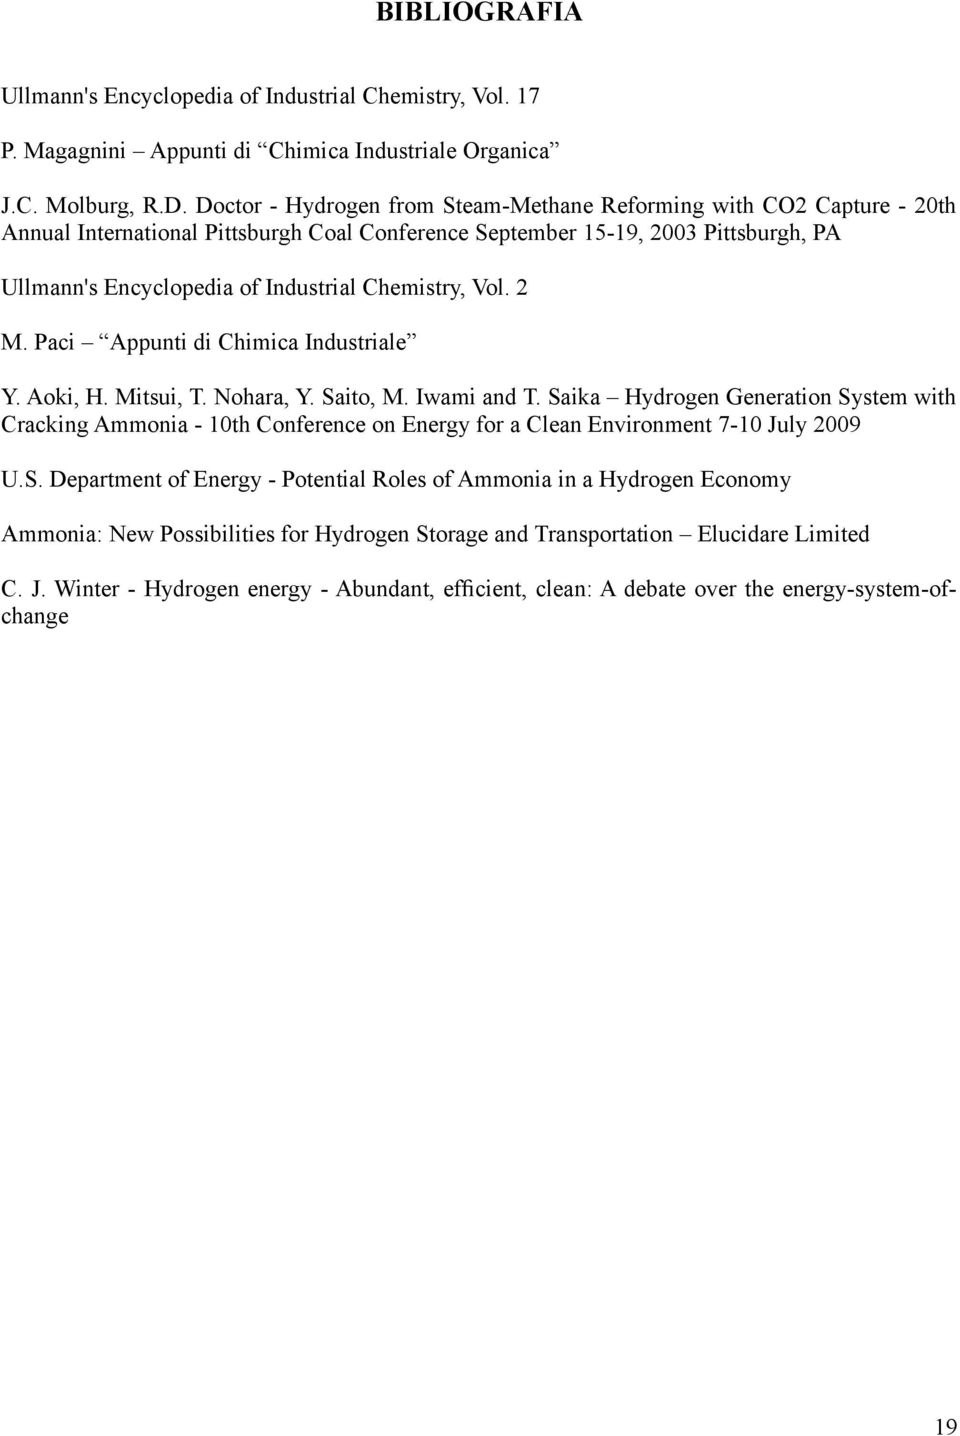 Chemistry, Vol. 2 M. Paci Appunti di Chimica Industriale Y. Aoki, H. Mitsui, T. Nohara, Y. Saito, M. Iwami and T.